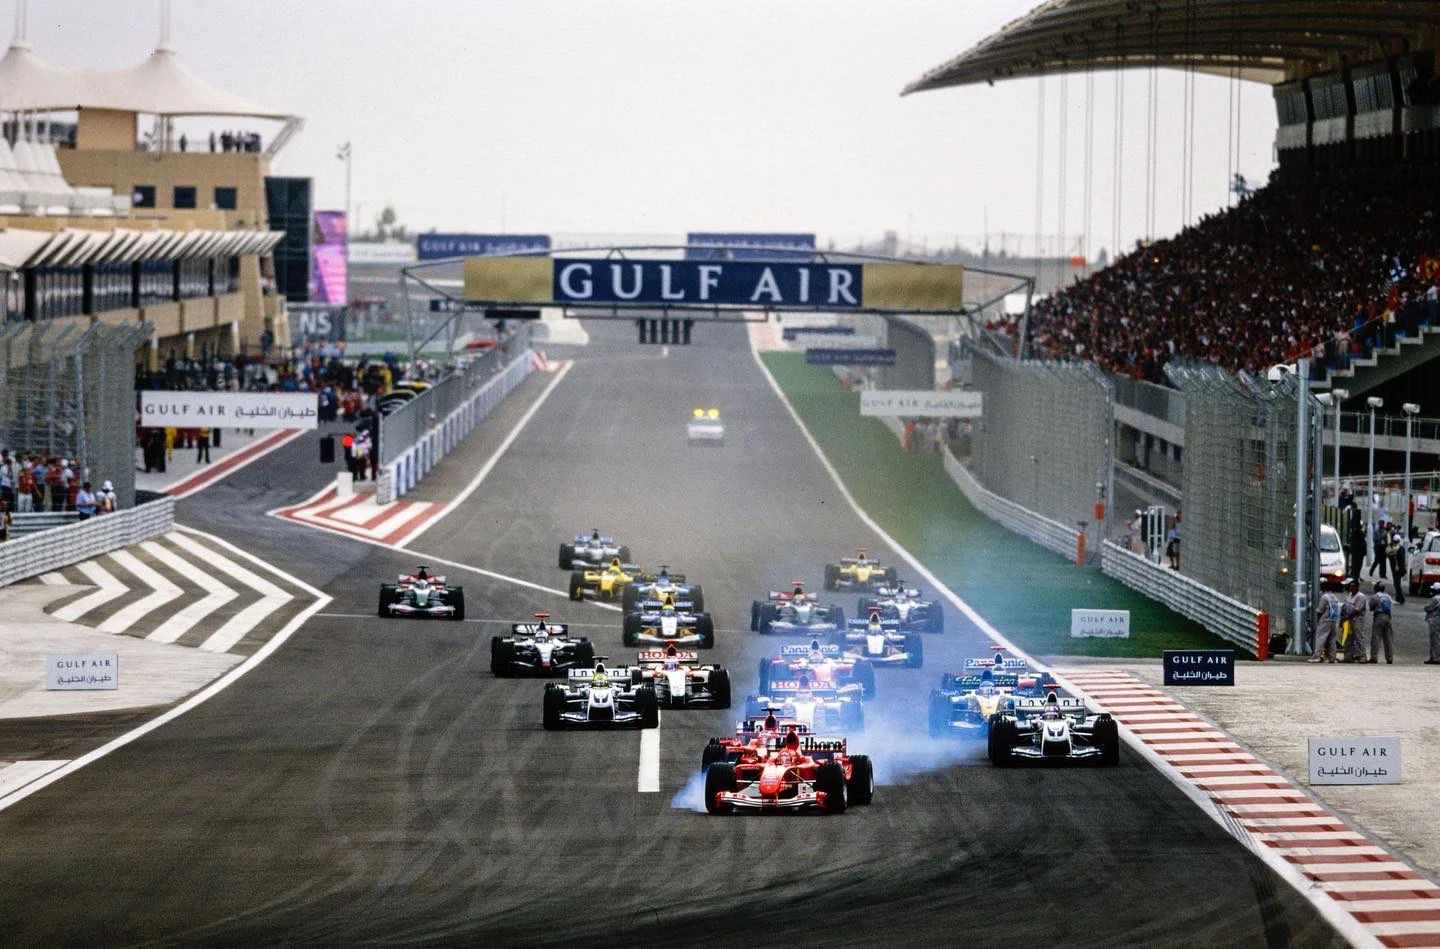 Bahrain Grand Prix 2004